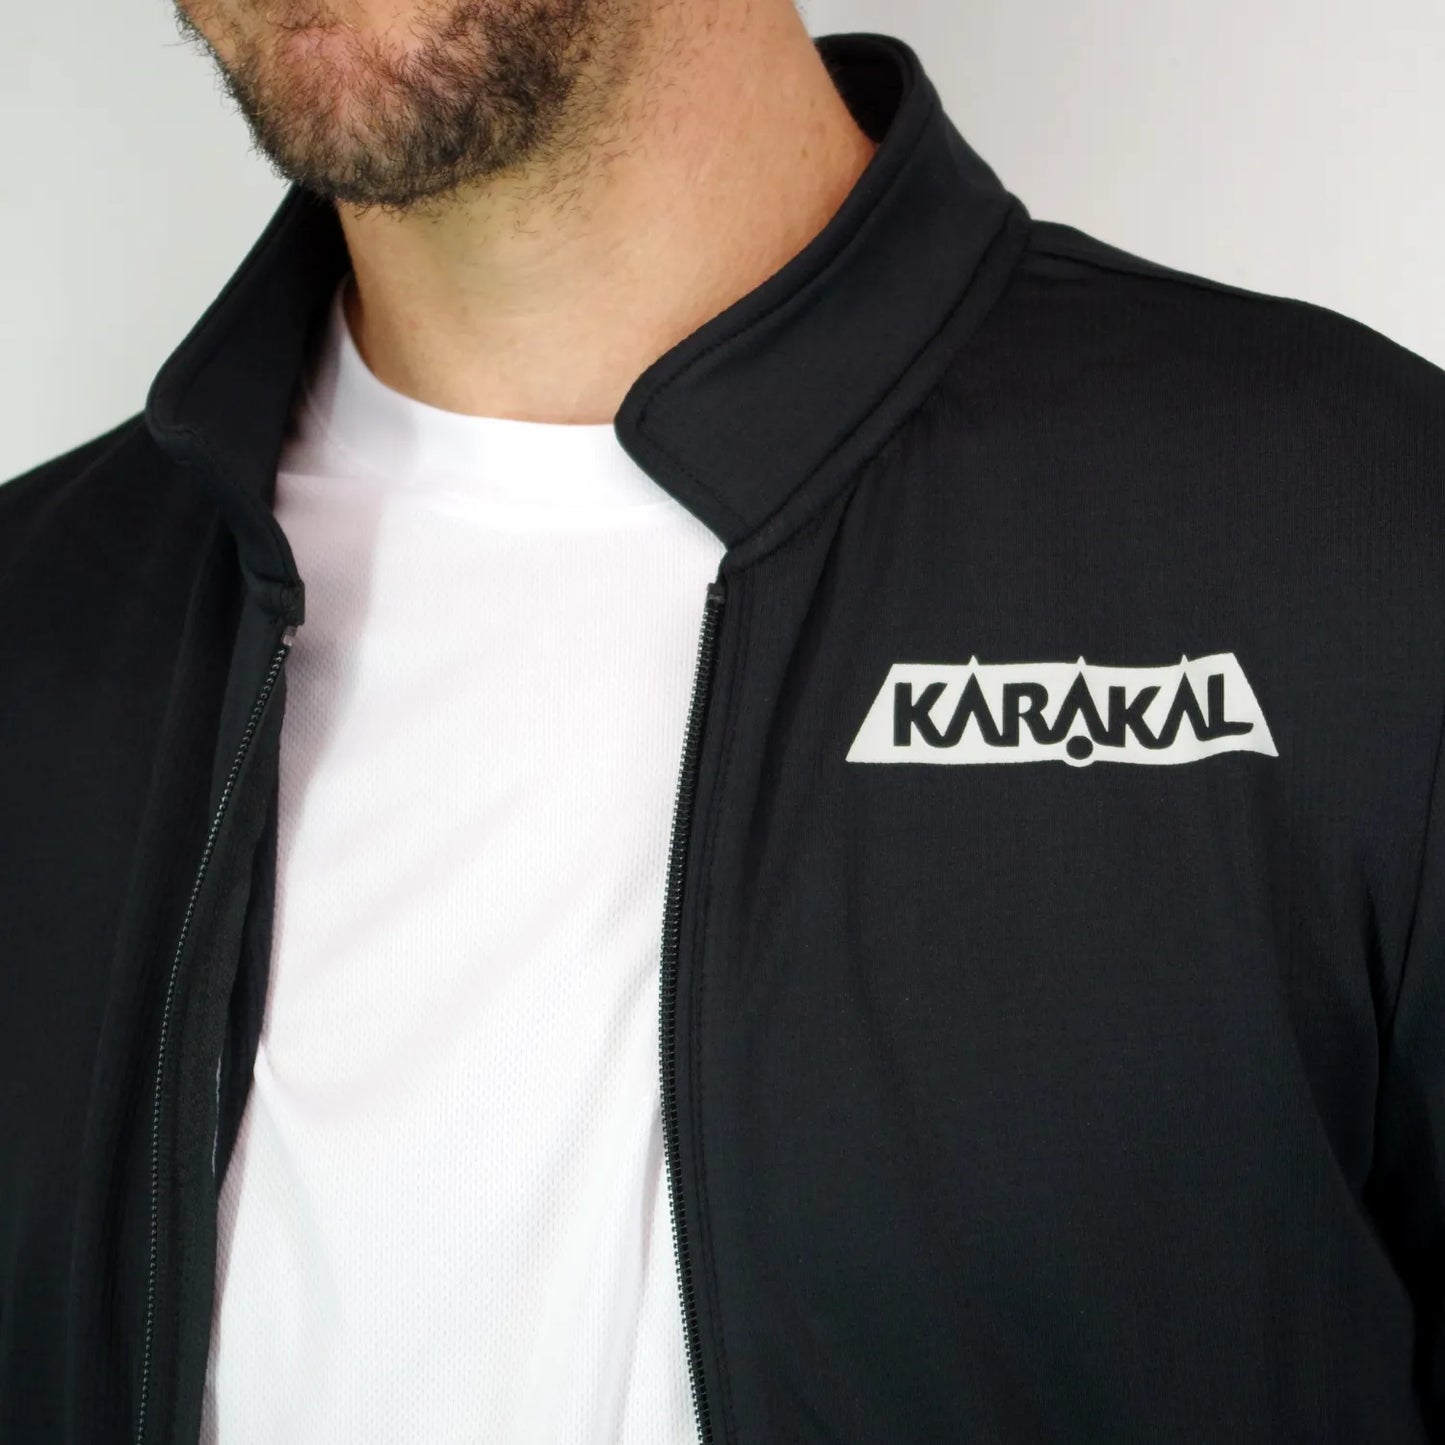 Karakal Pro Tour Jacket